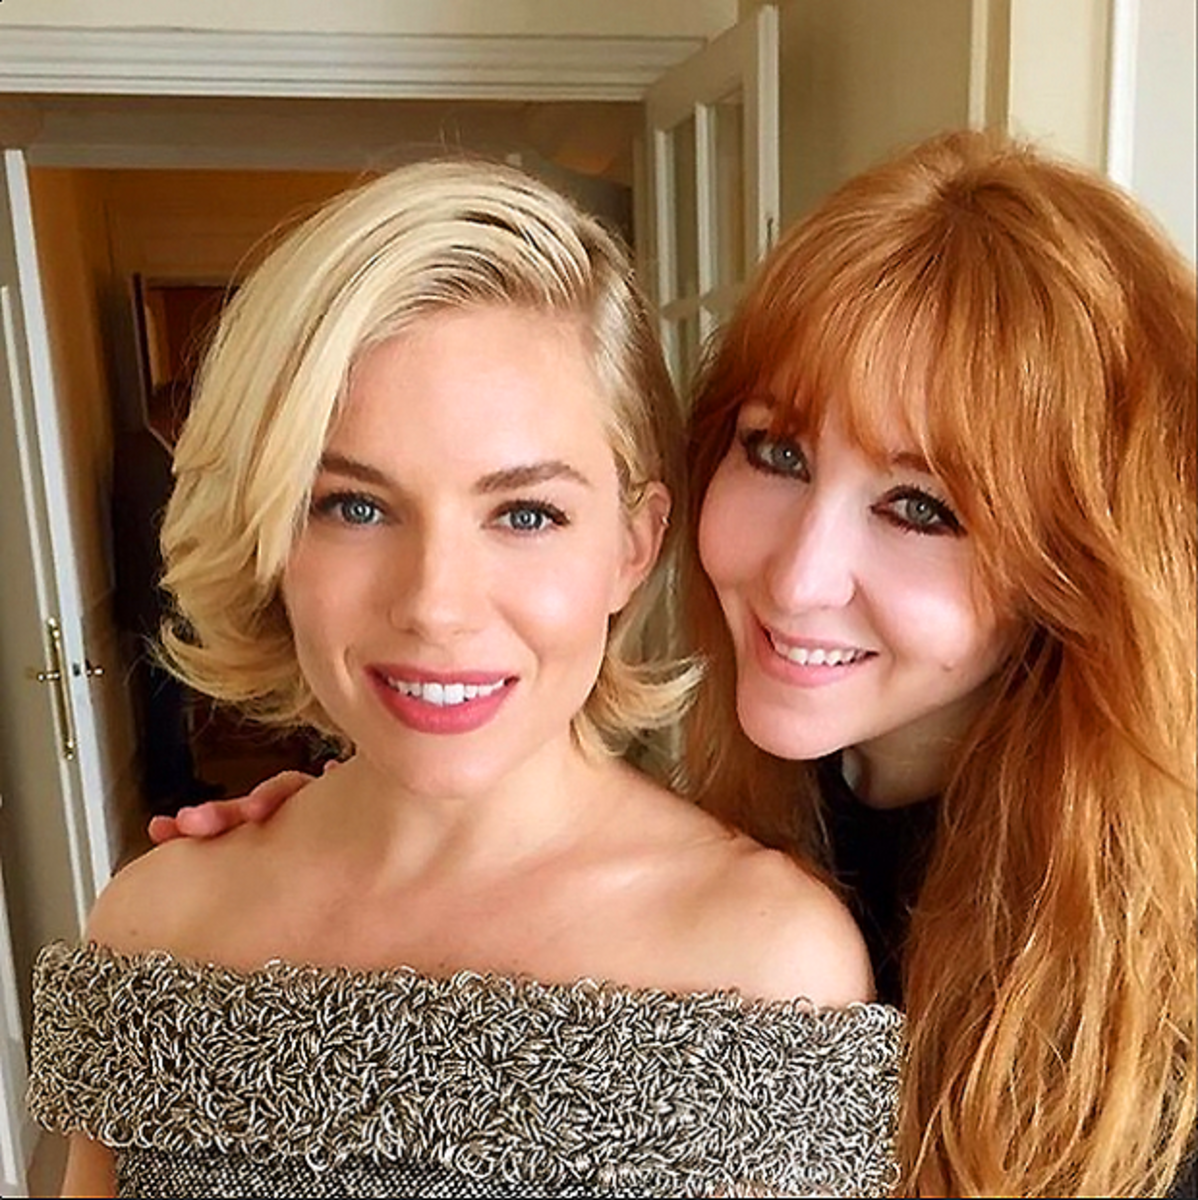 Charlotte Tilbury and actress Sienna Miller at Cannes 2015 via @ctilburymakeup